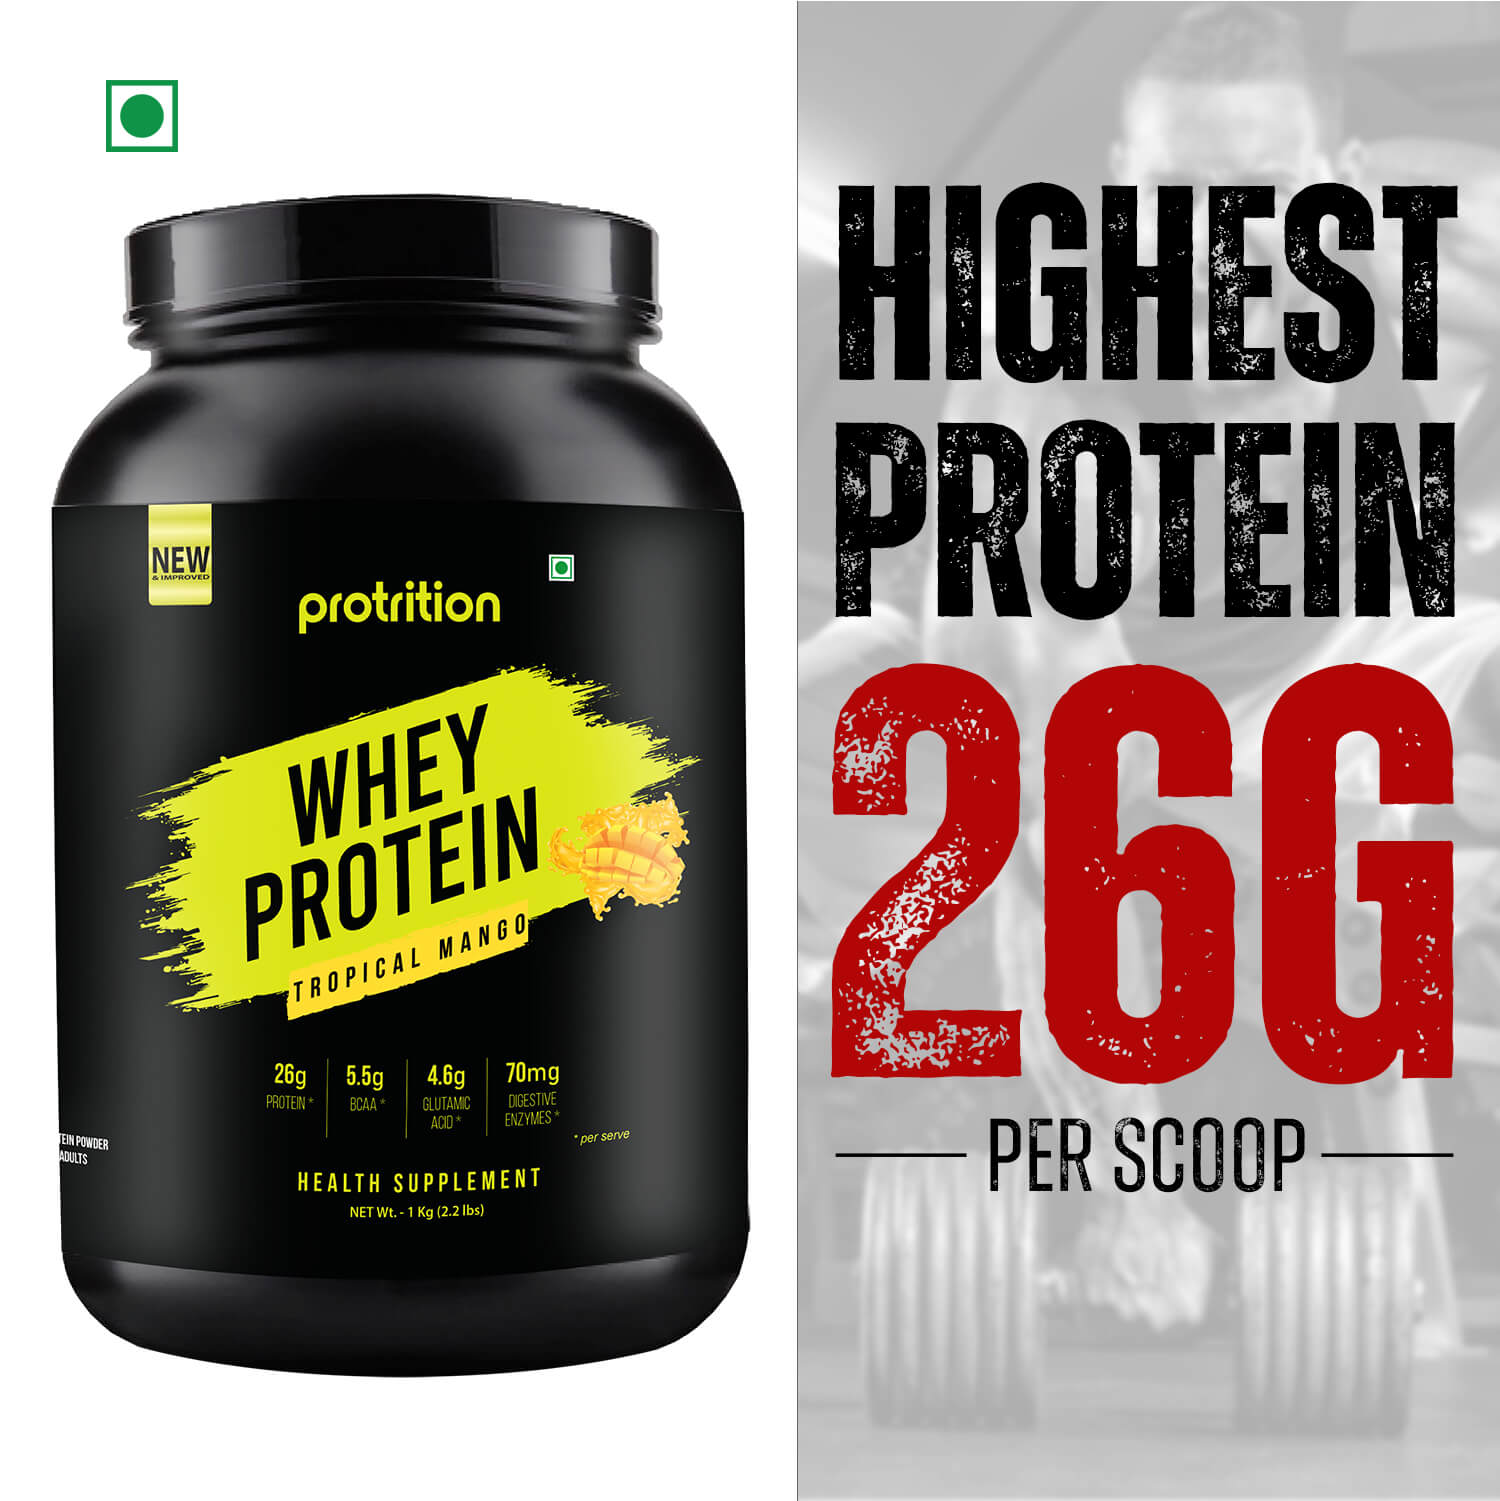 Protrition Whey Protein, 1Kg, Tropical Mango